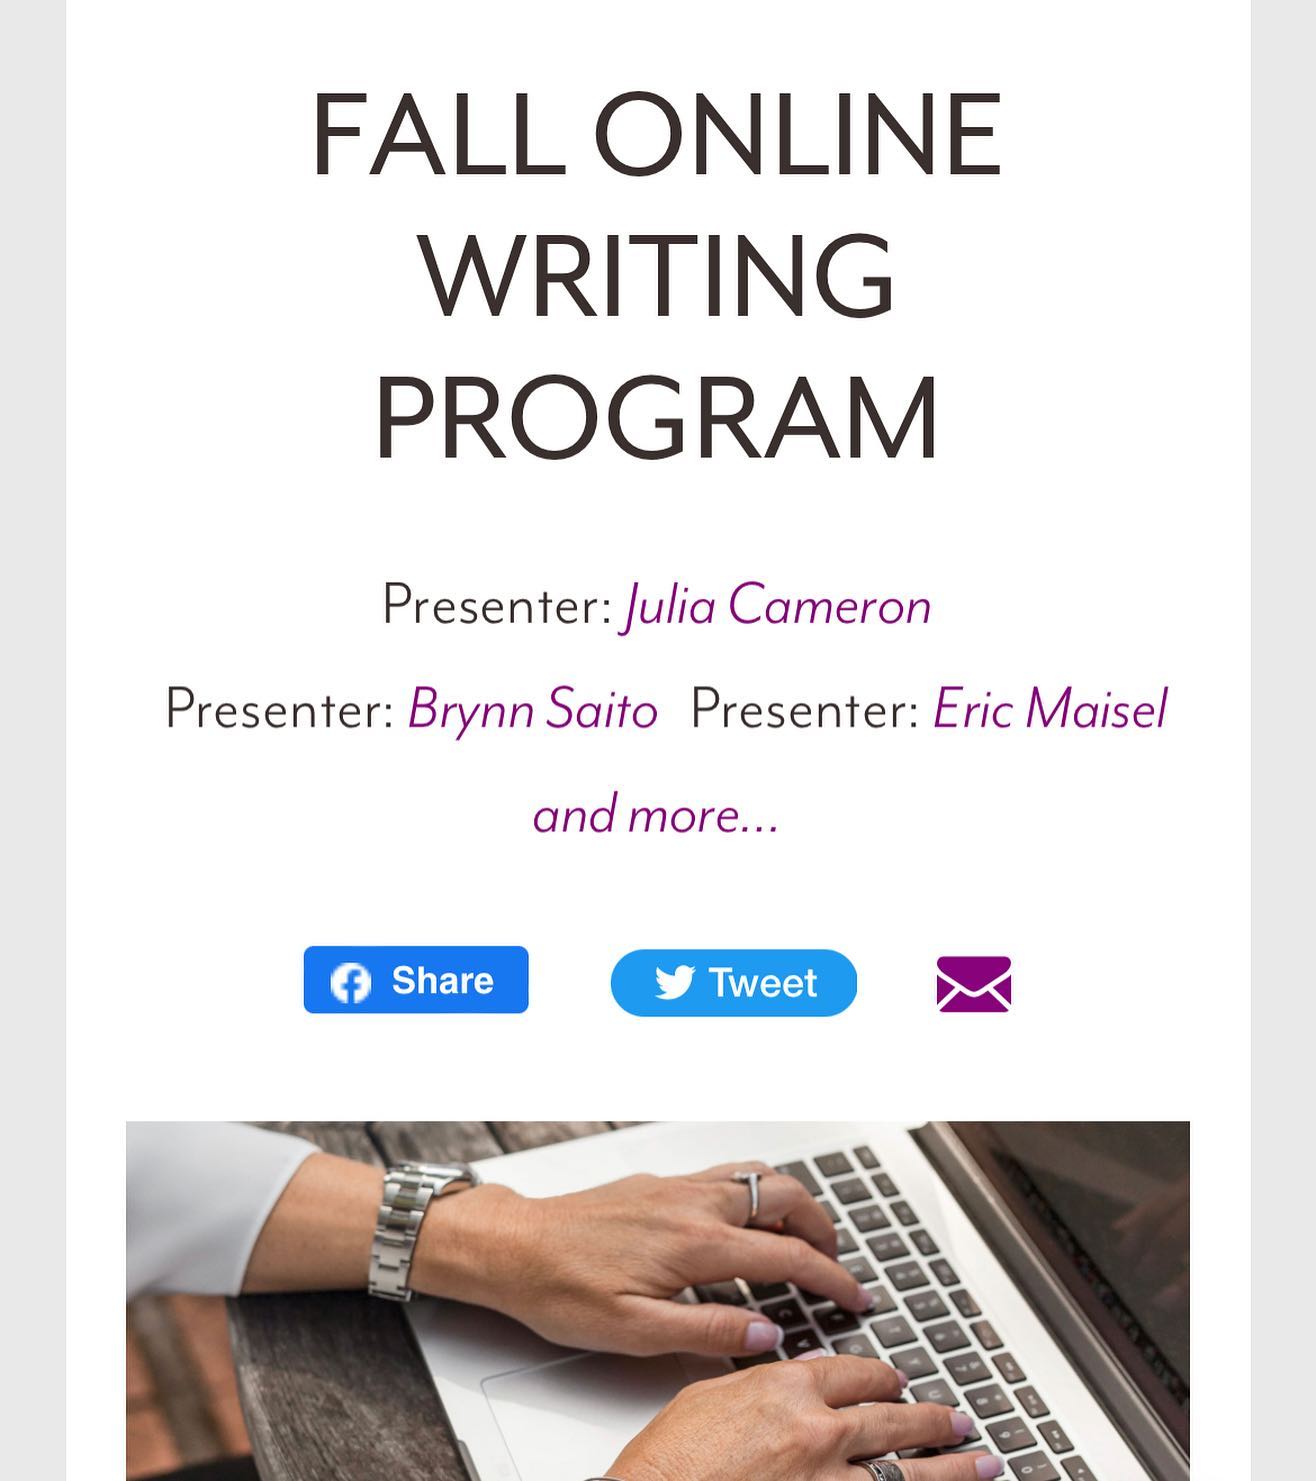 Join me a week from today! @kripalucenter @monkjoel https://kripalu.org/presenters-programs/fall-online-writing-program